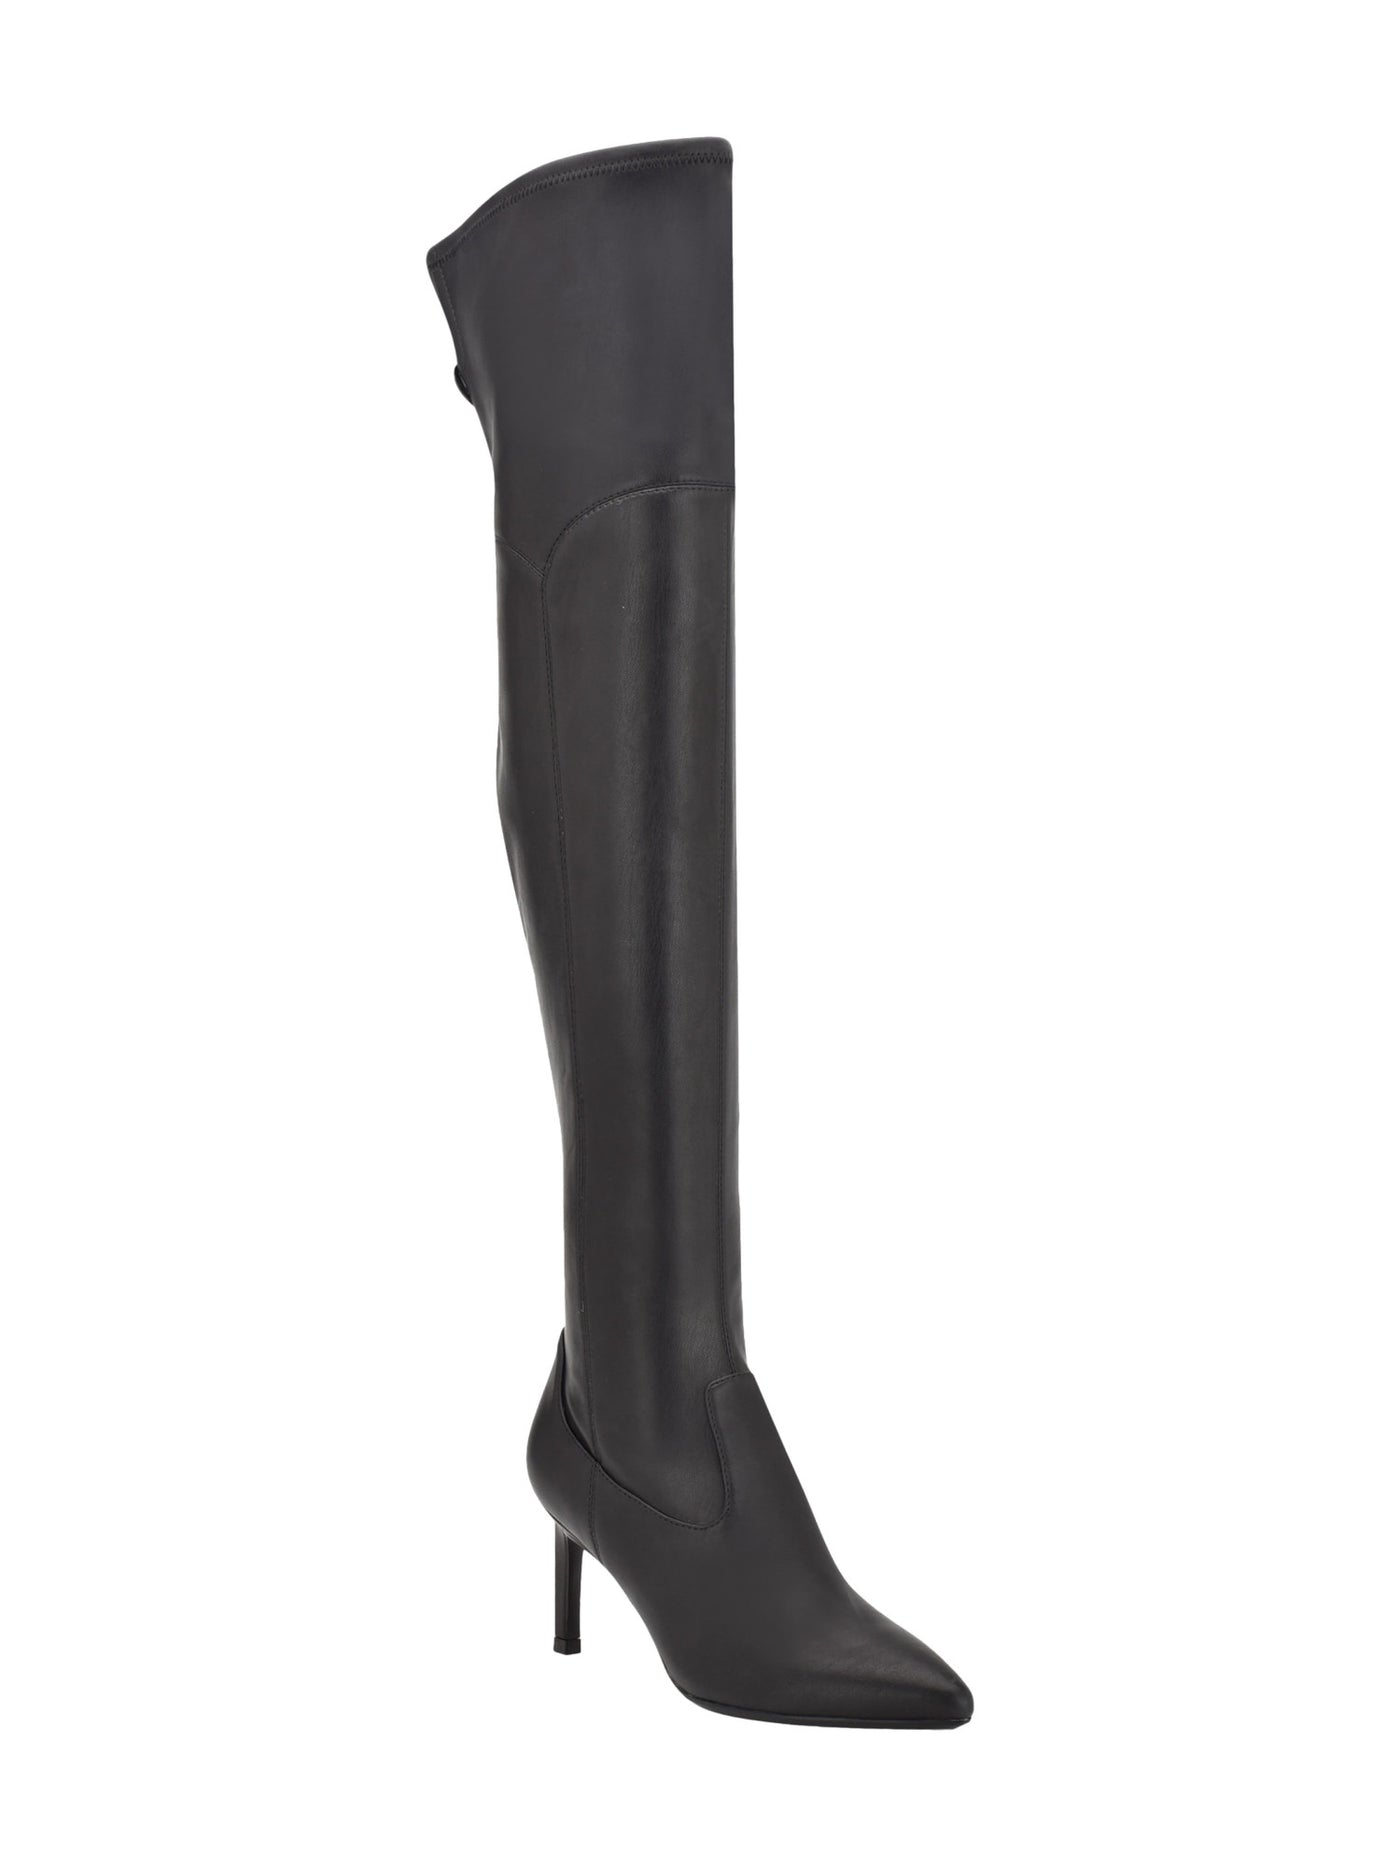 CALVIN KLEIN Womens Black Goring Padded Sacha Pointy Toe Stiletto Zip-Up Dress Boots 8 M